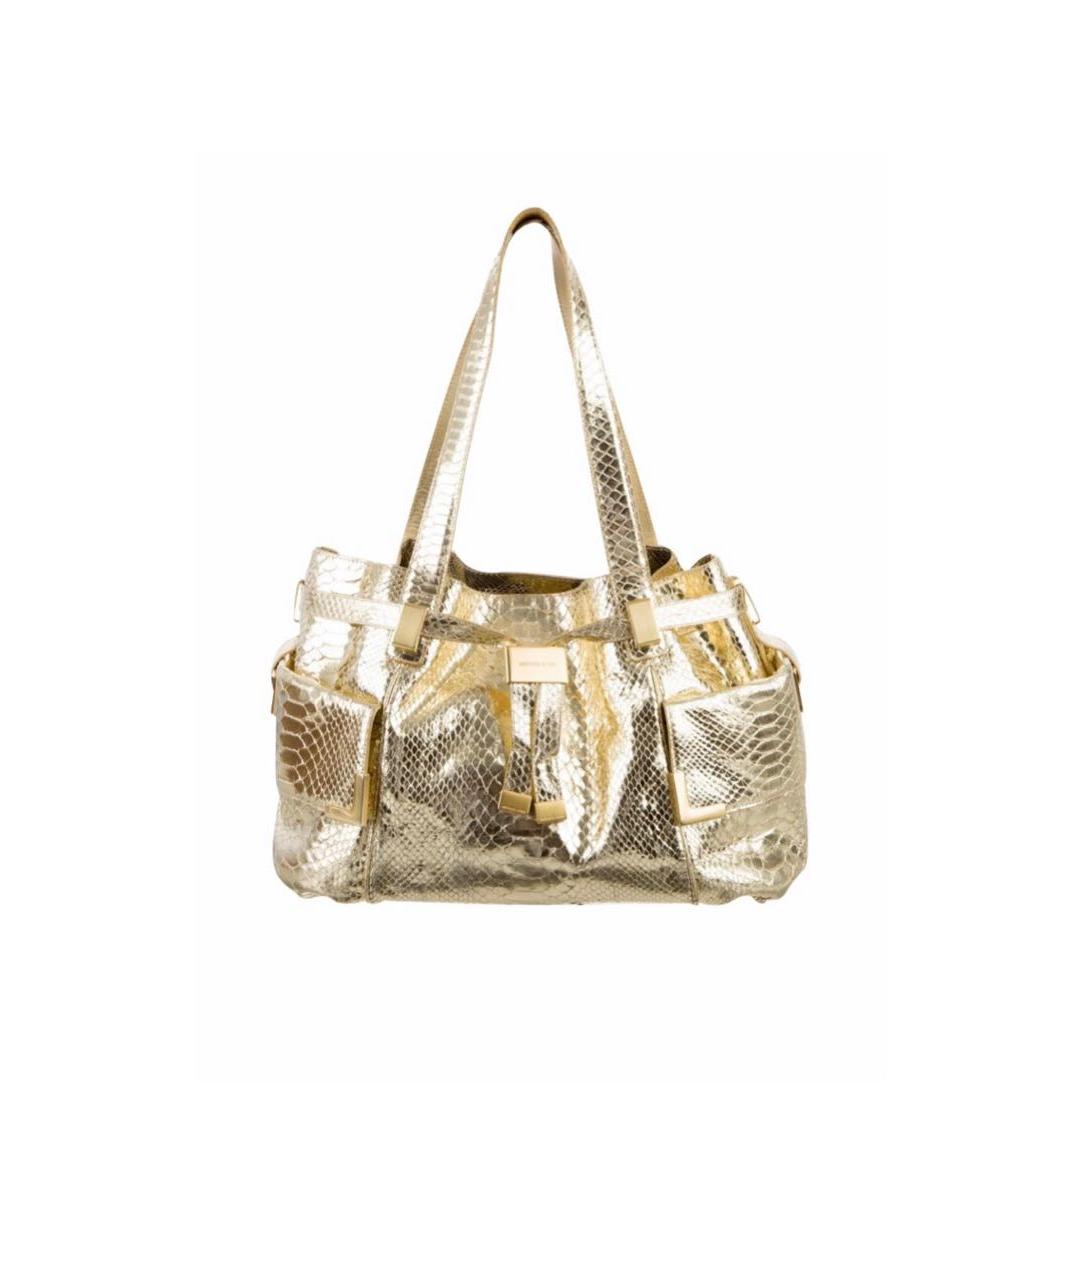 MICHAEL KORS COLLECTION Золотая сумка тоут из экзотической кожи, фото 1